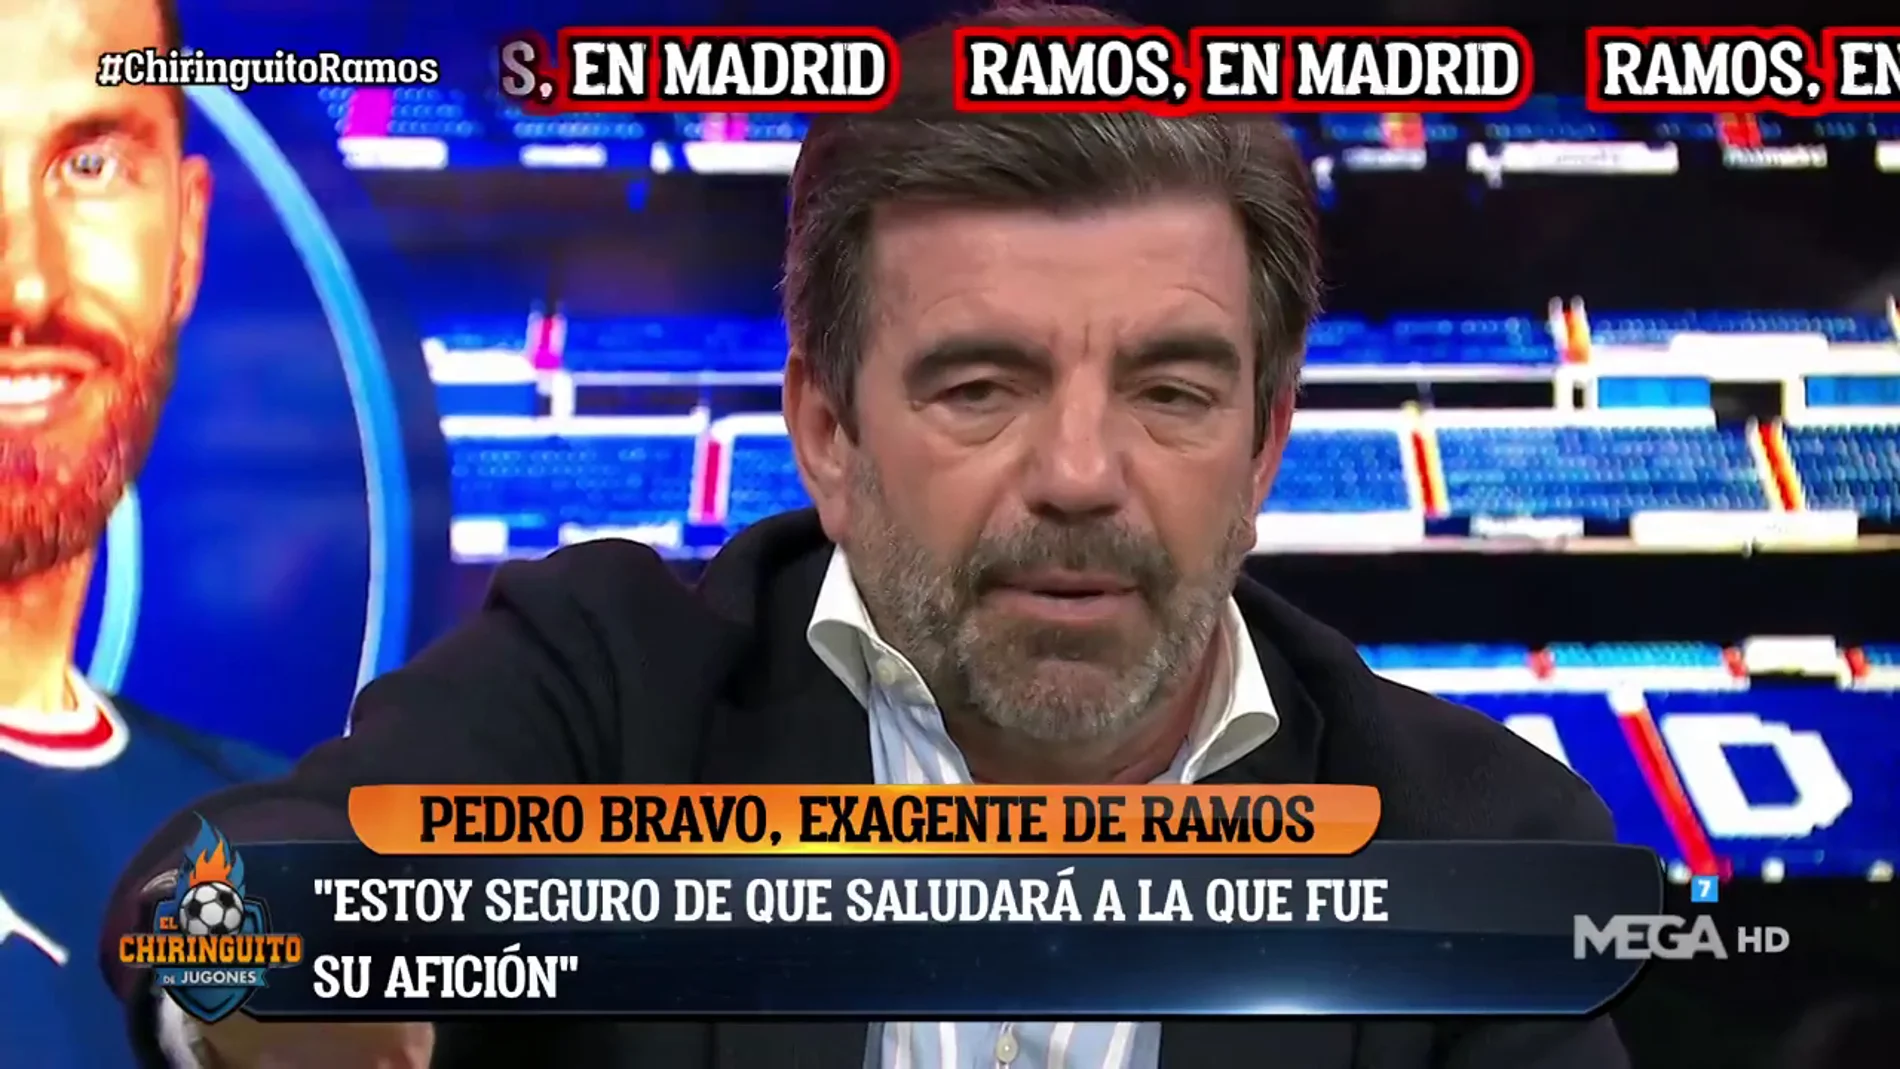 Pedro Bravo: "Ramos saldrá a saludar al madridismo, seguro"